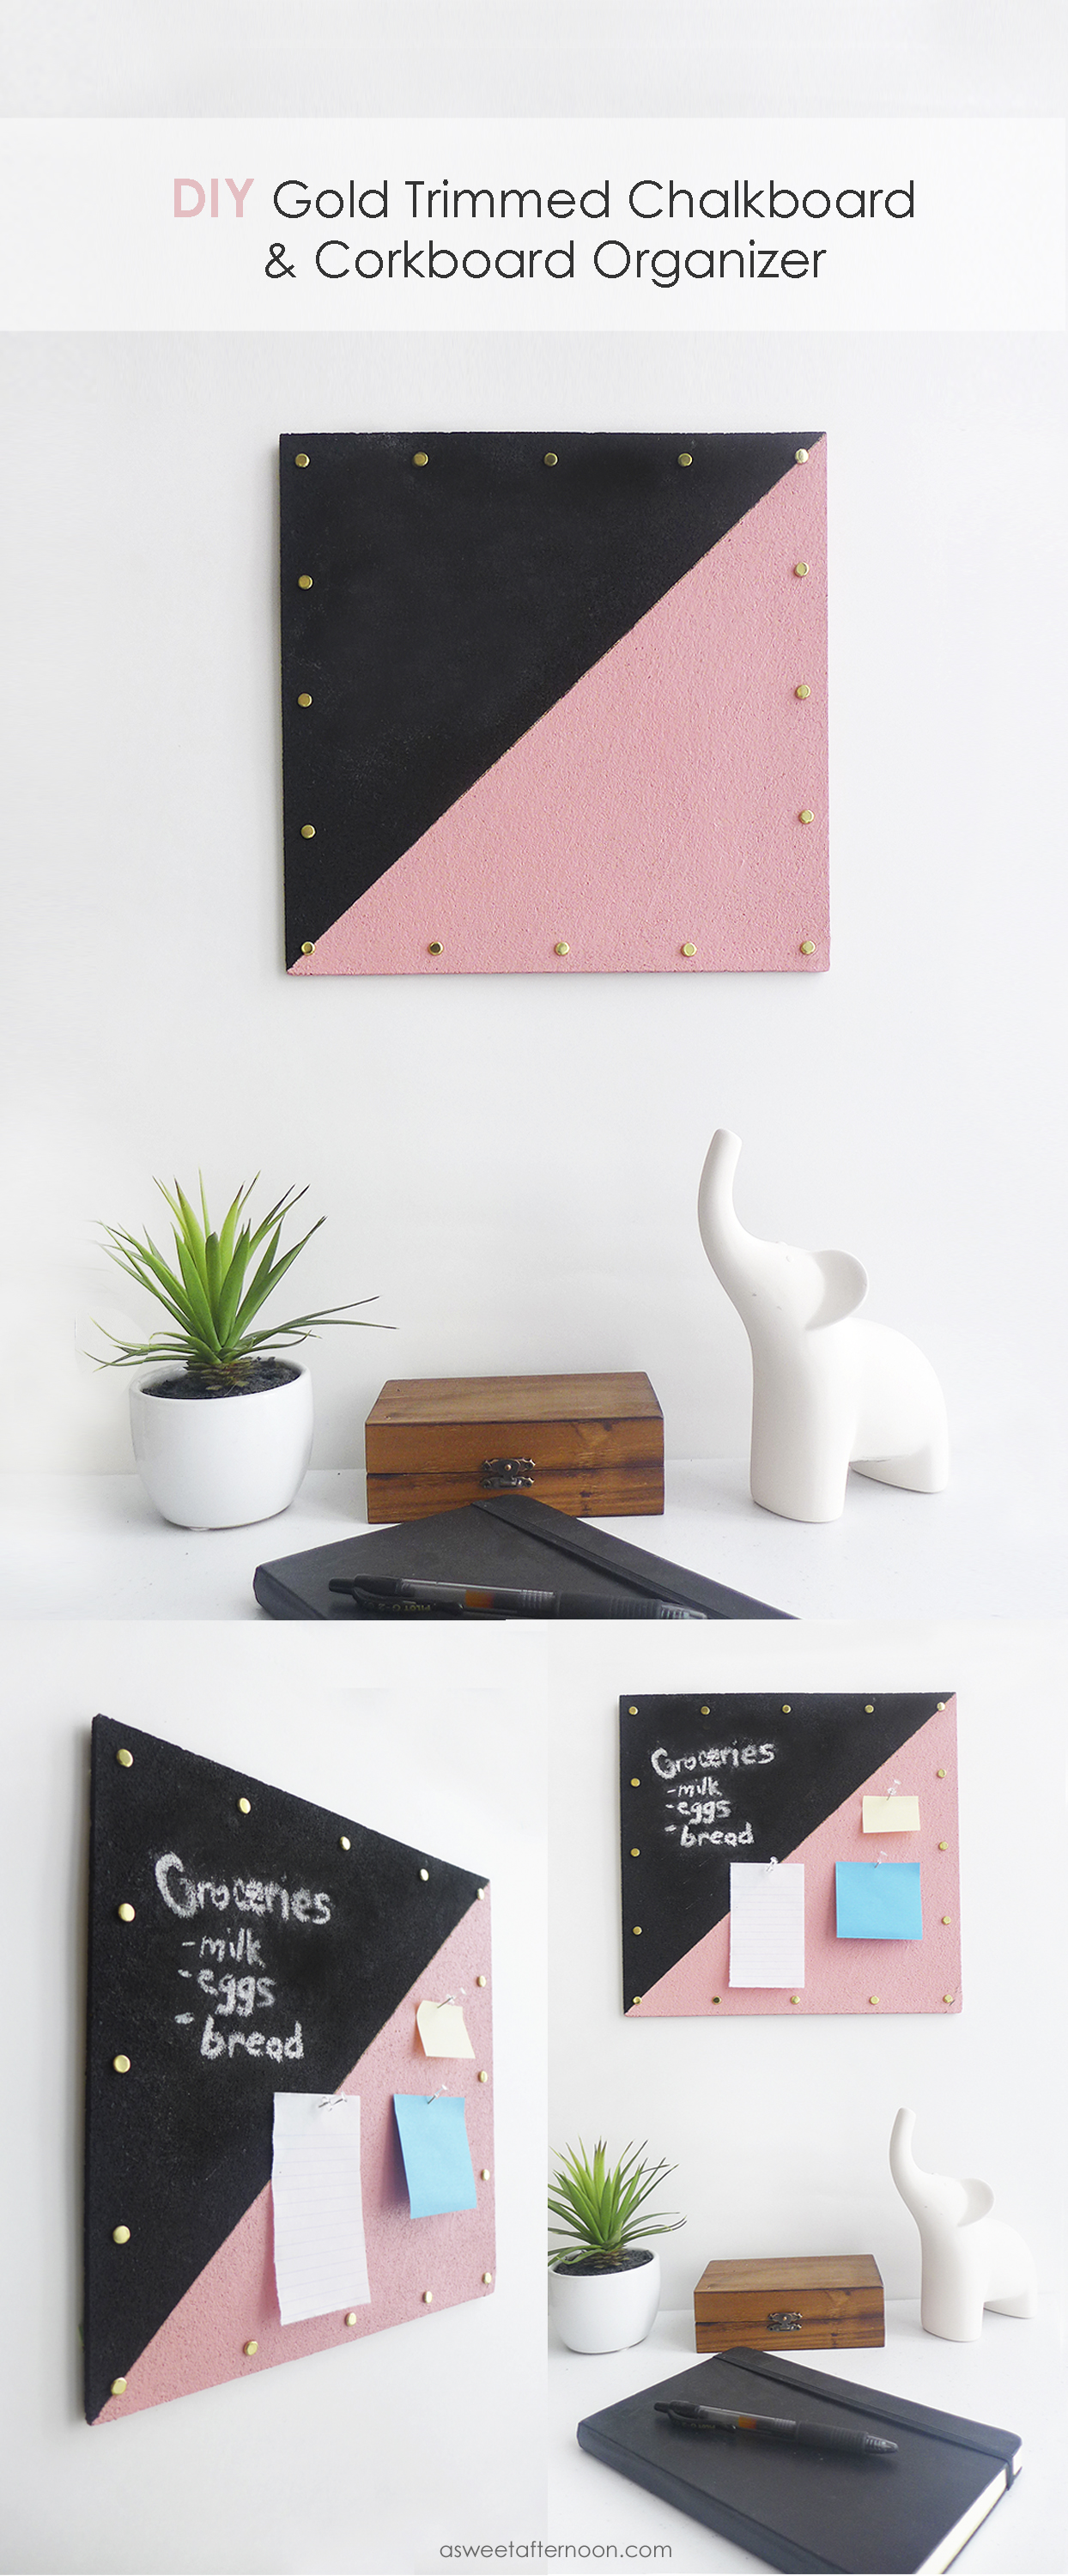 DIY-gold-trimmed-chalkboard-and-corkboard-organizer-office-decor